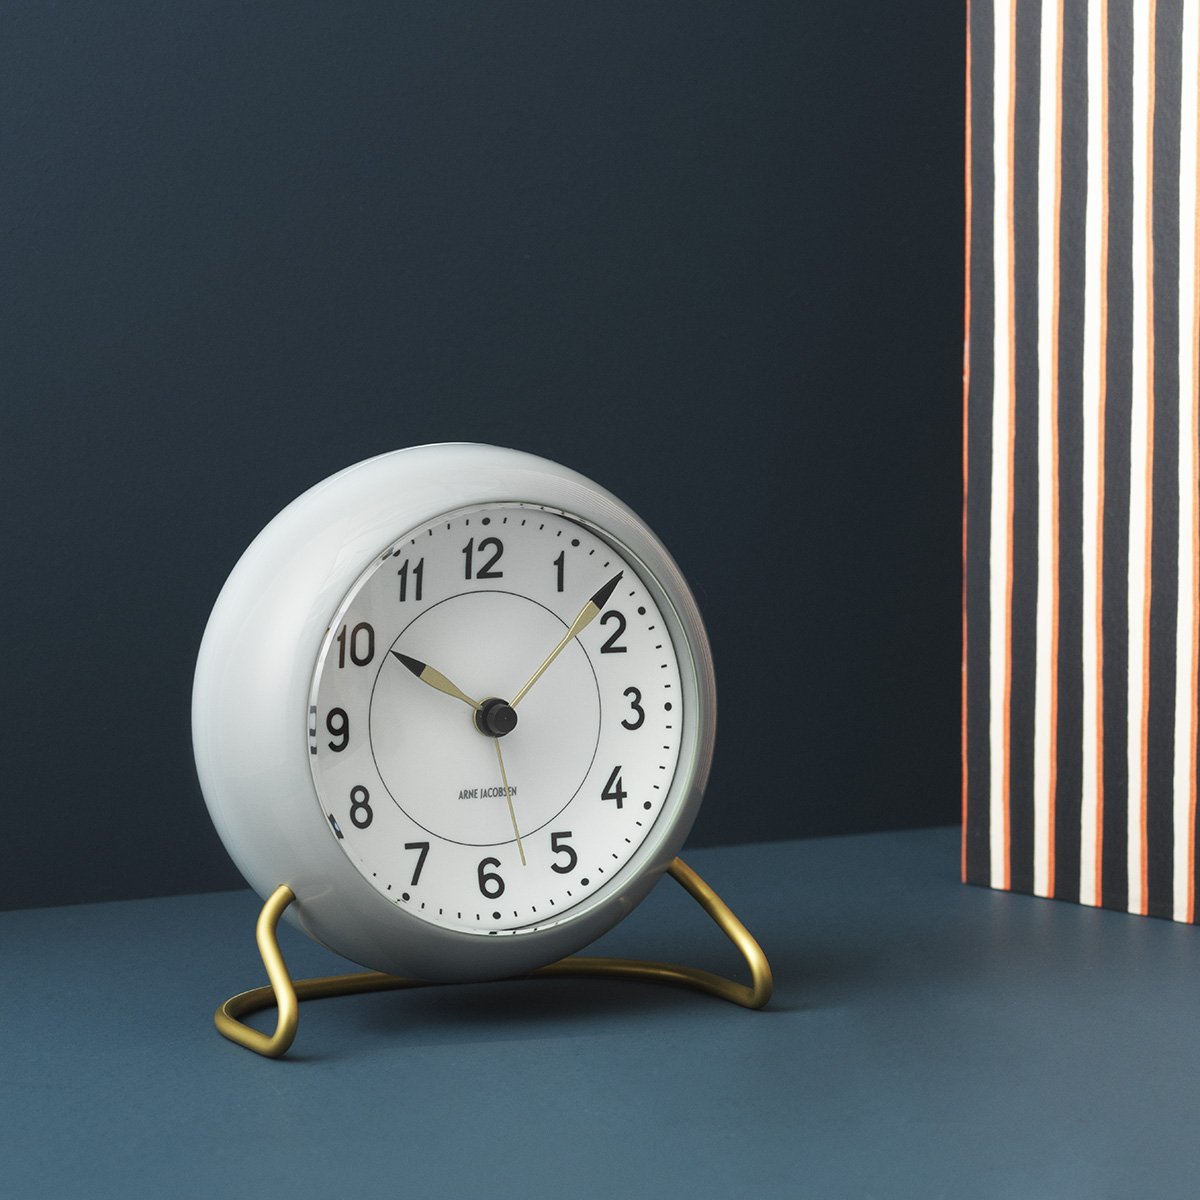 Arne Jacobsen Station Table klok met alarmgrijs en wit, 12 cm